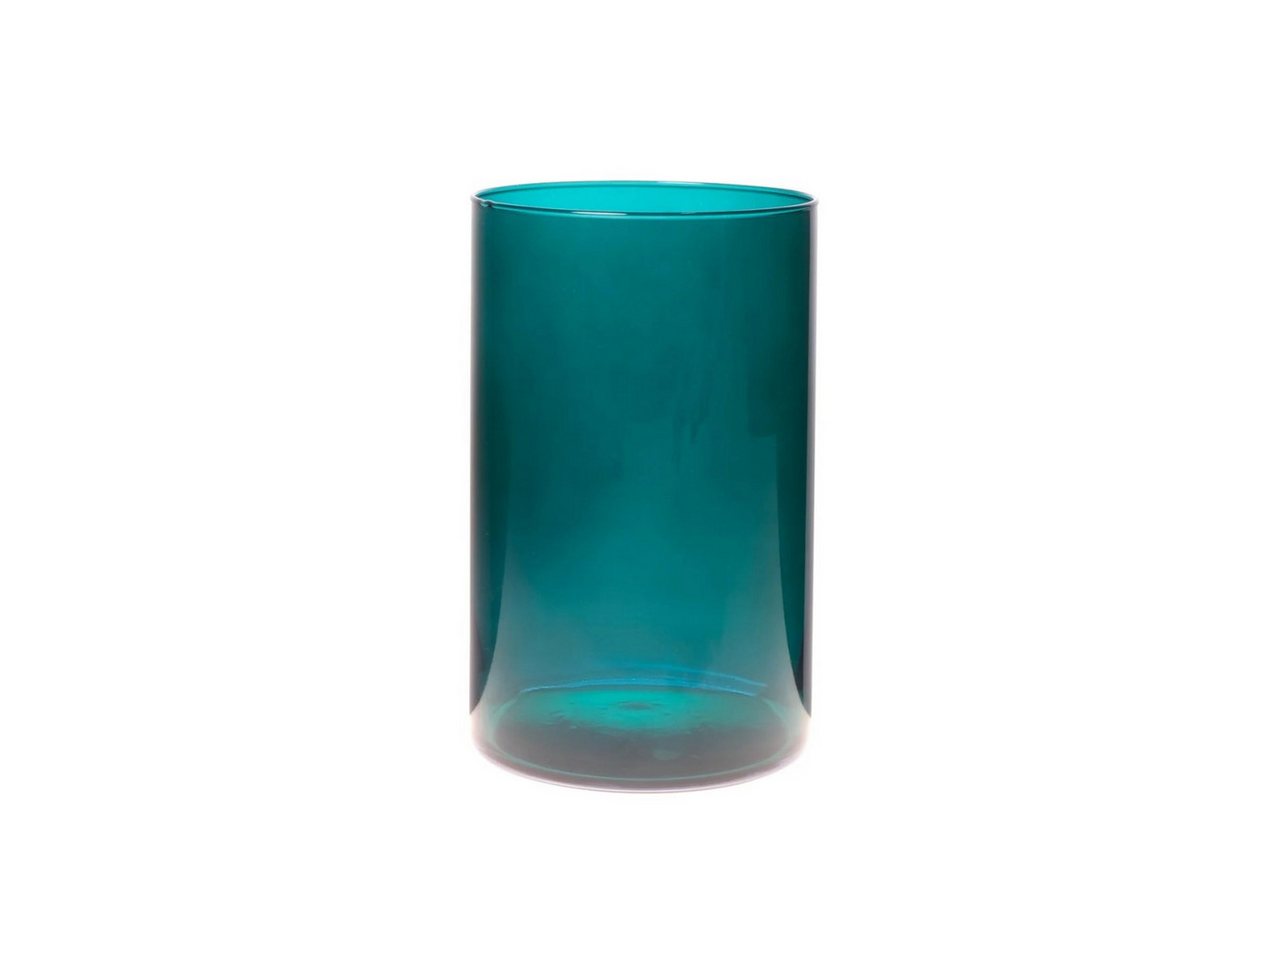 Hakbijl Glass Deko-Glas, Blau H:20cm D:14cm Glas von Hakbijl Glass